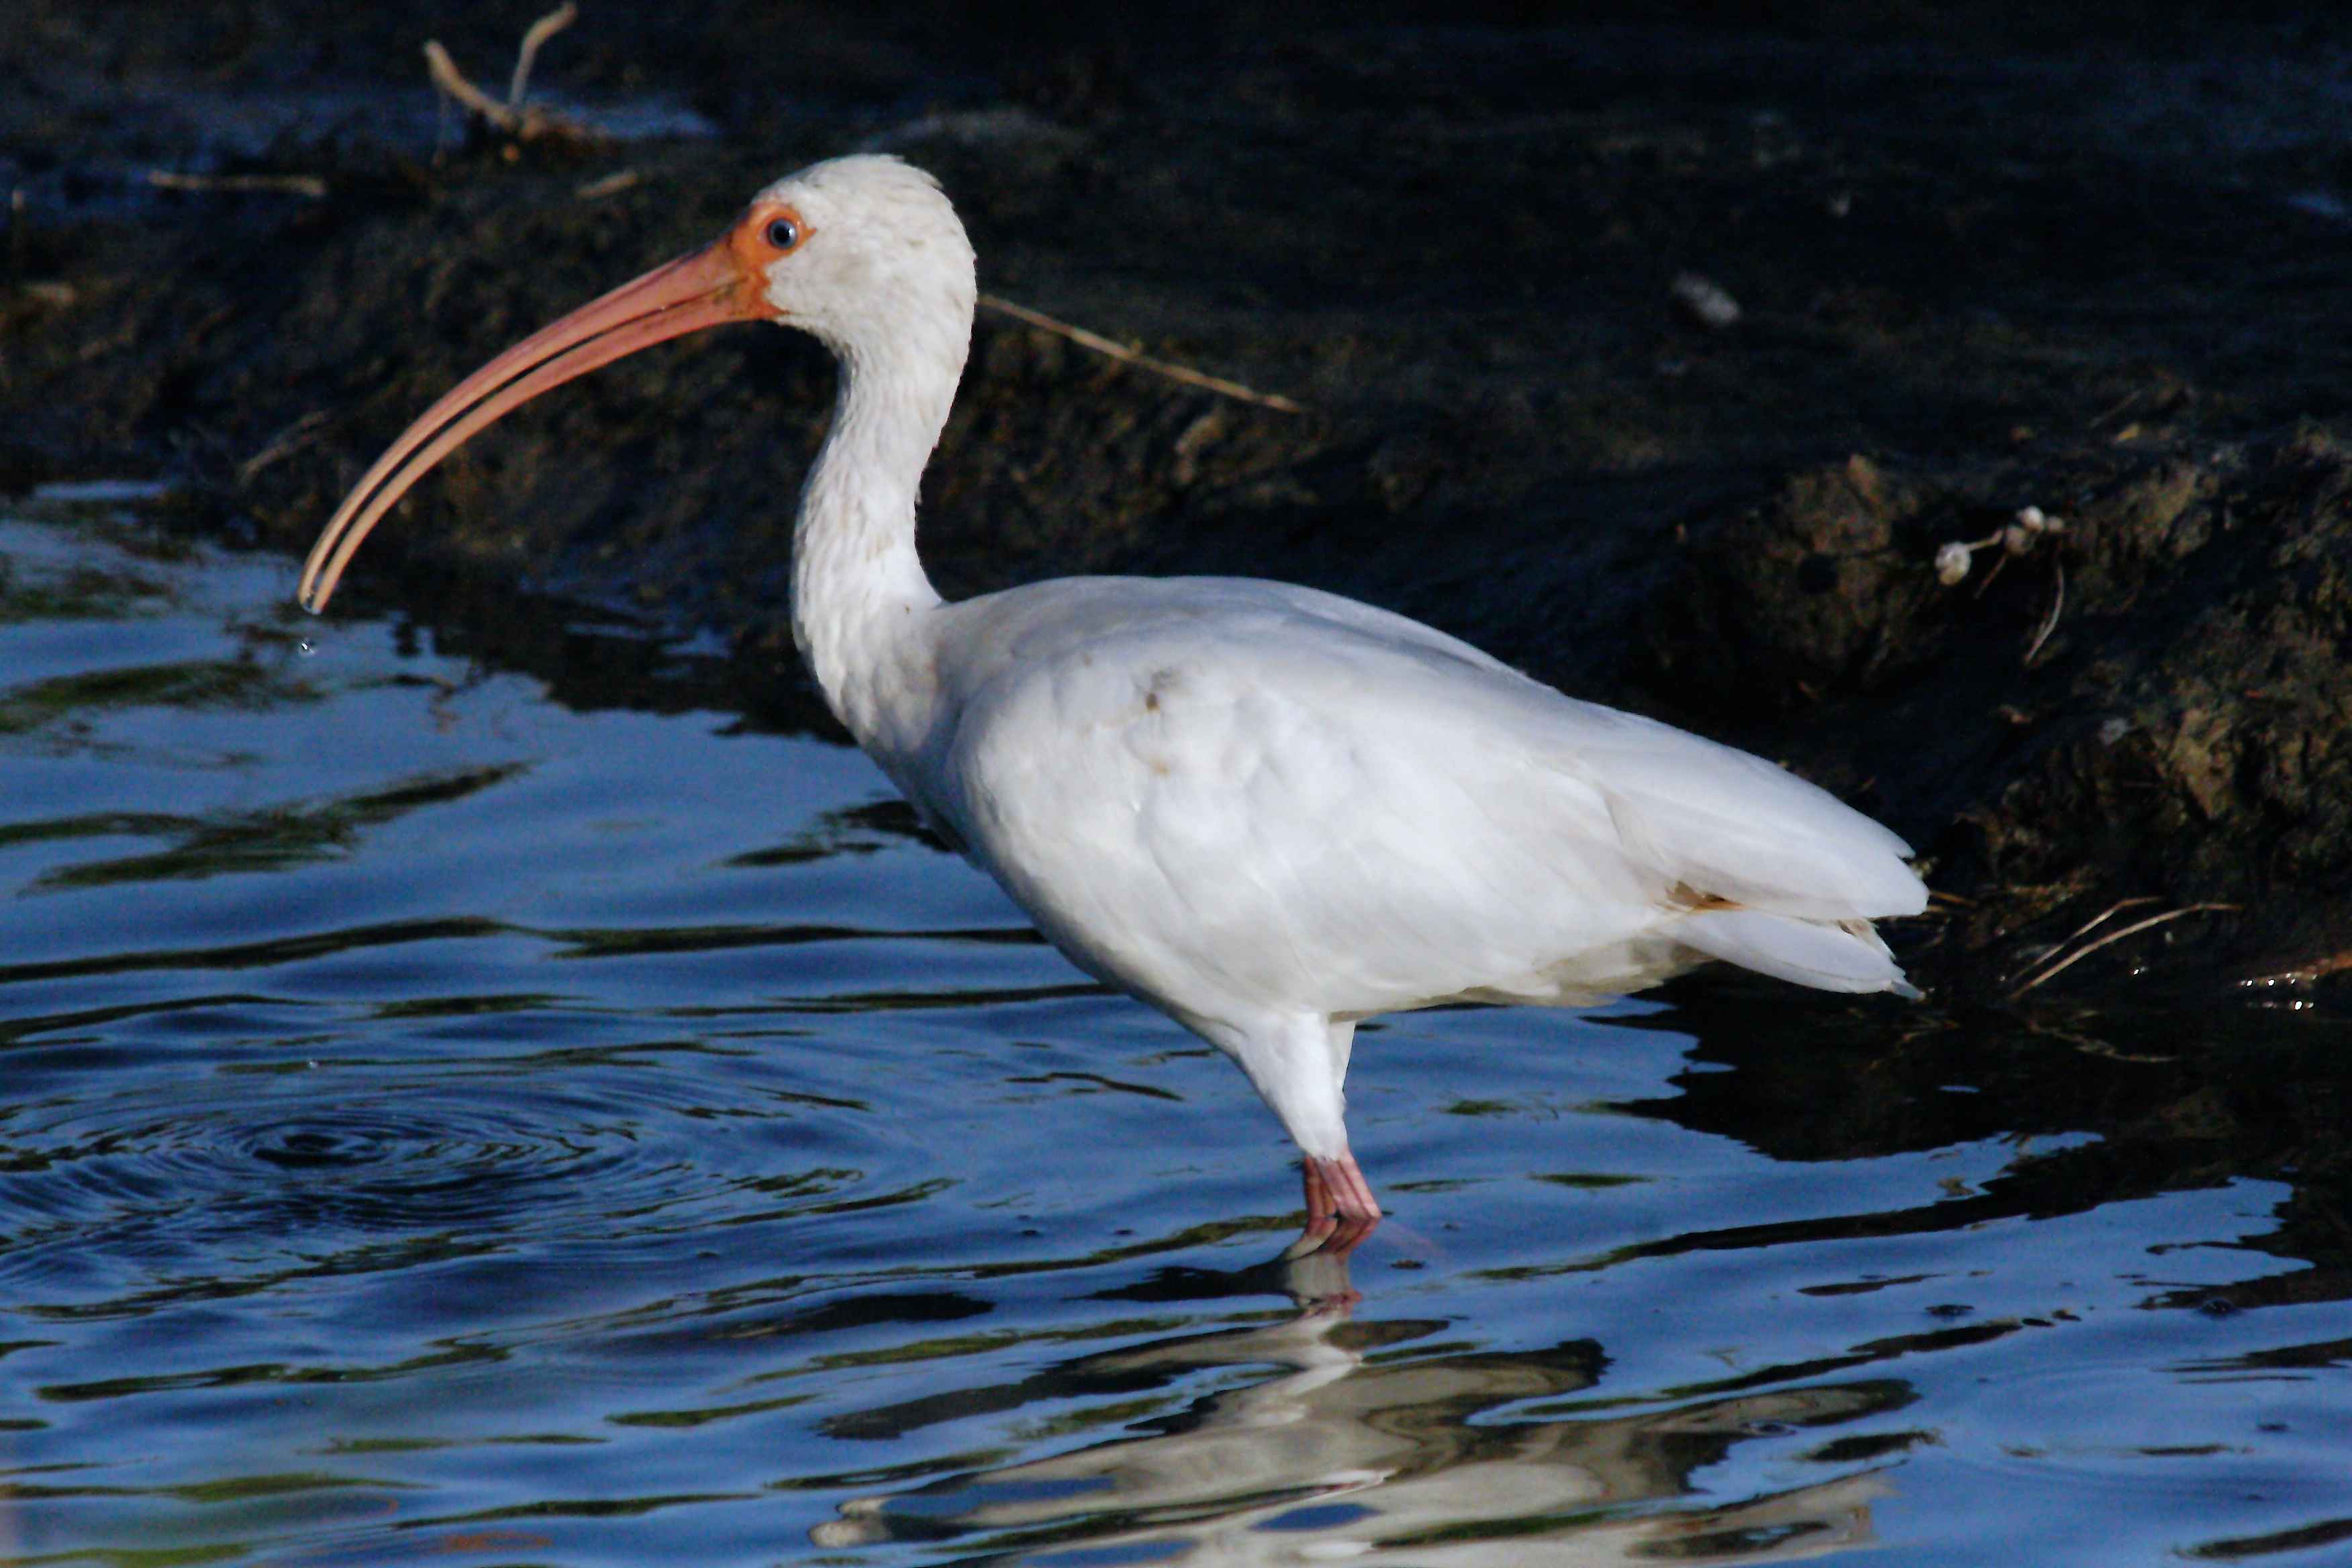 Free picture: American white ibis, bird, wading, water, eudocimus albus